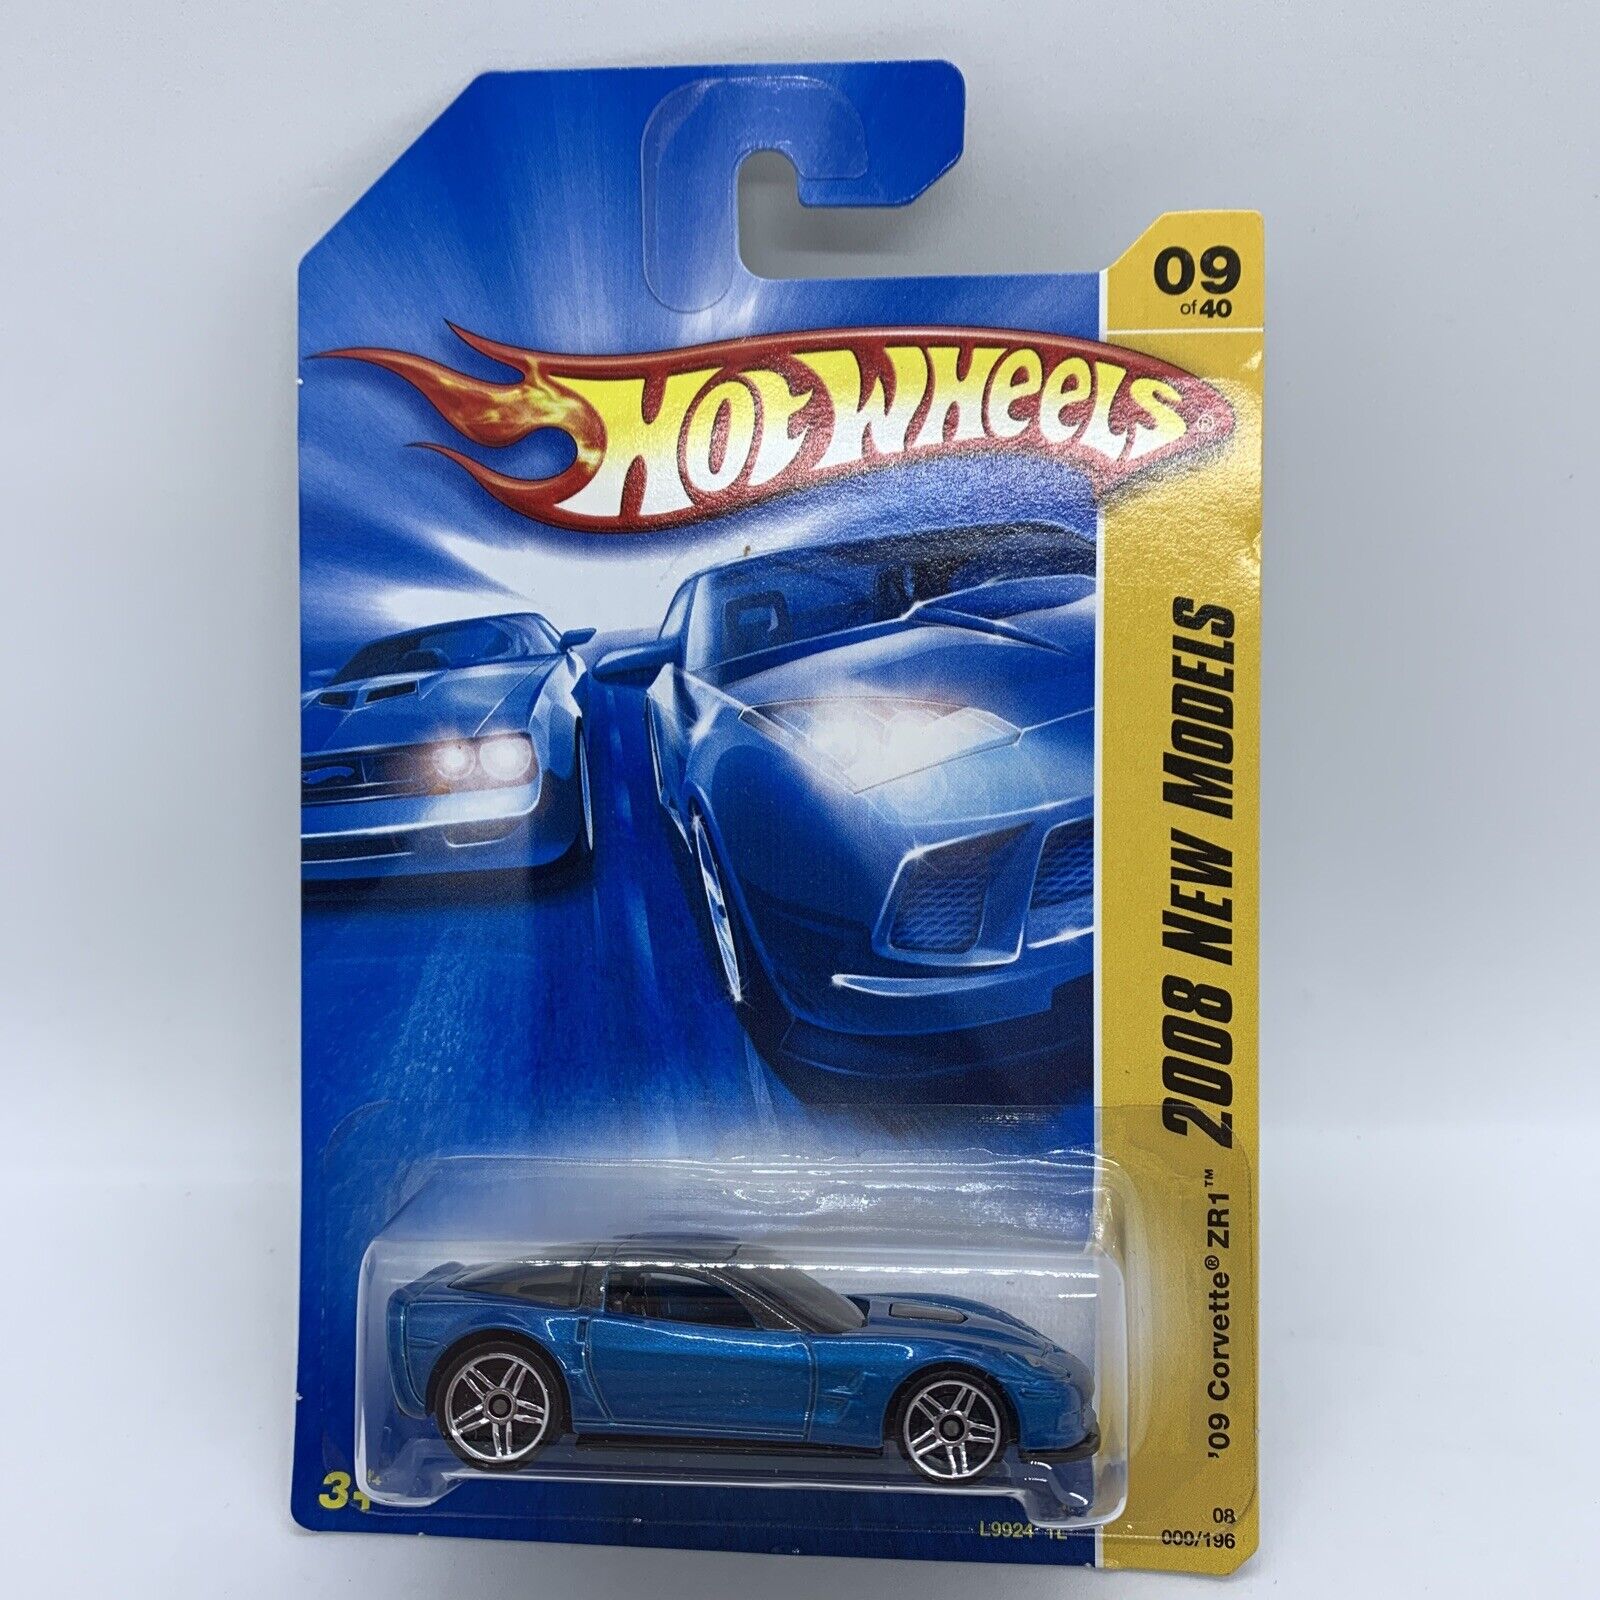 Hot Wheels ‘09 Corvette ZR1 - 2008 New Models - Blue #9 Of 40